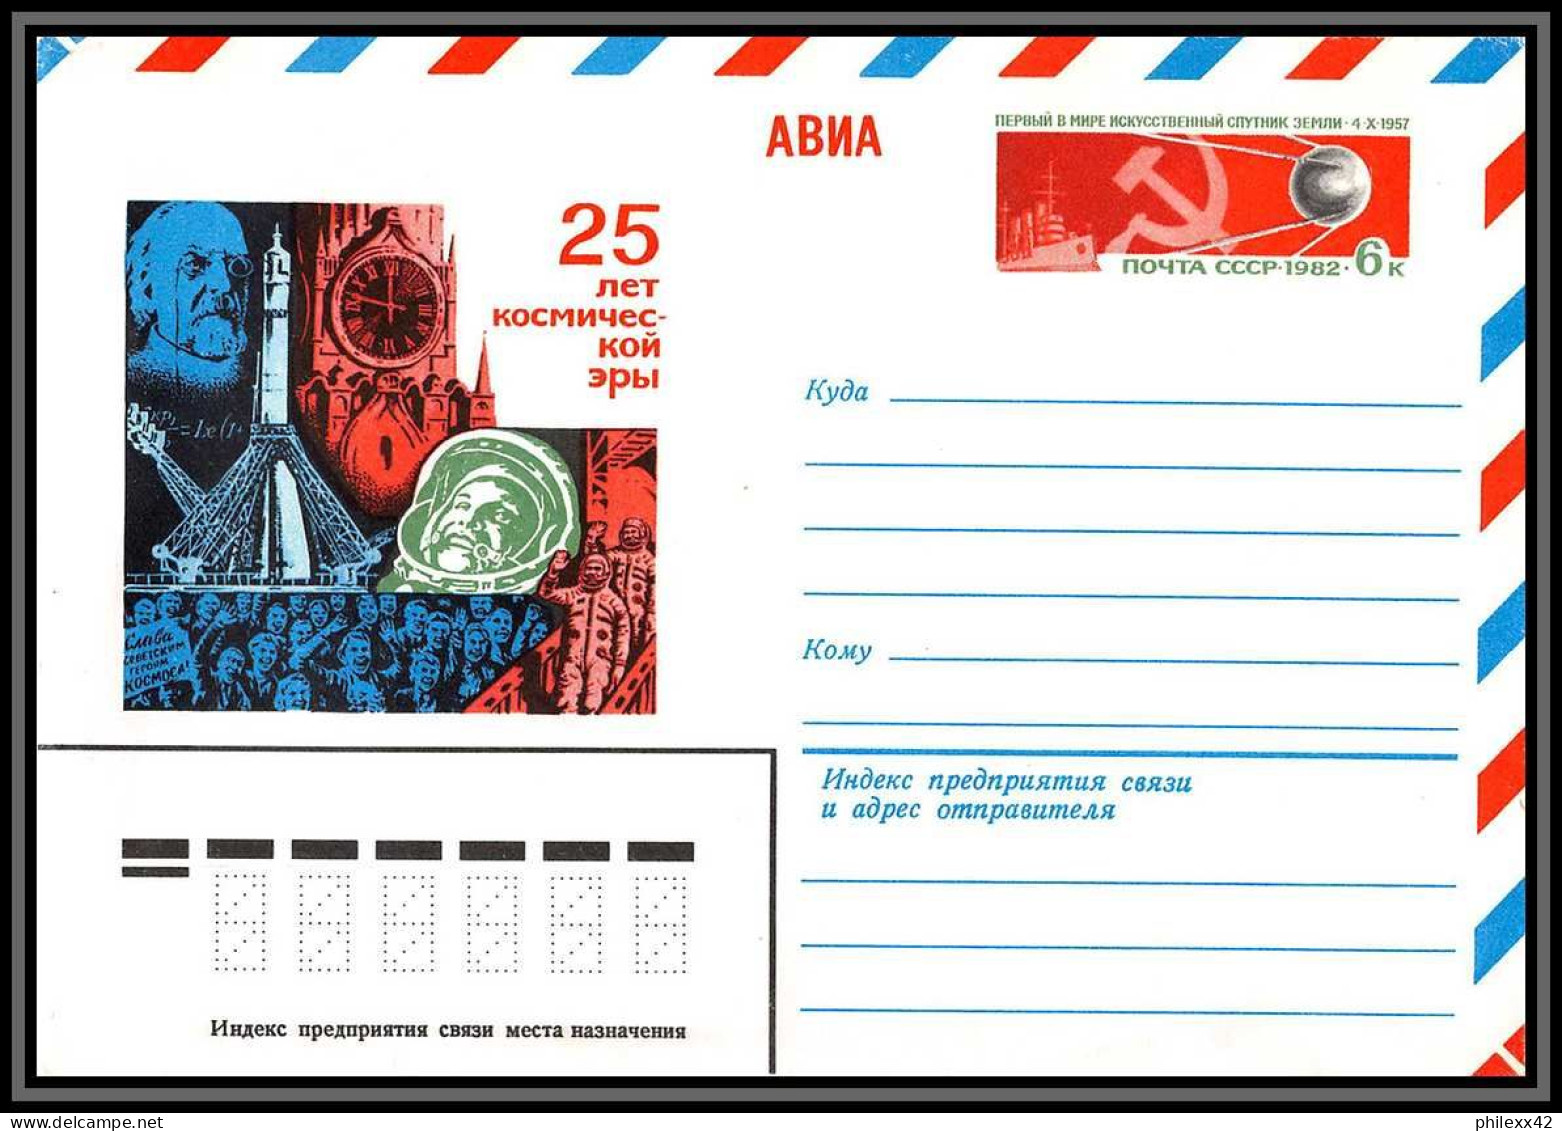 3694 Espace (space) Lot De 2 Entier Postal Stationery Russie (Russia Urss USSR) 17/09/1982 Tsiolkovski - UdSSR